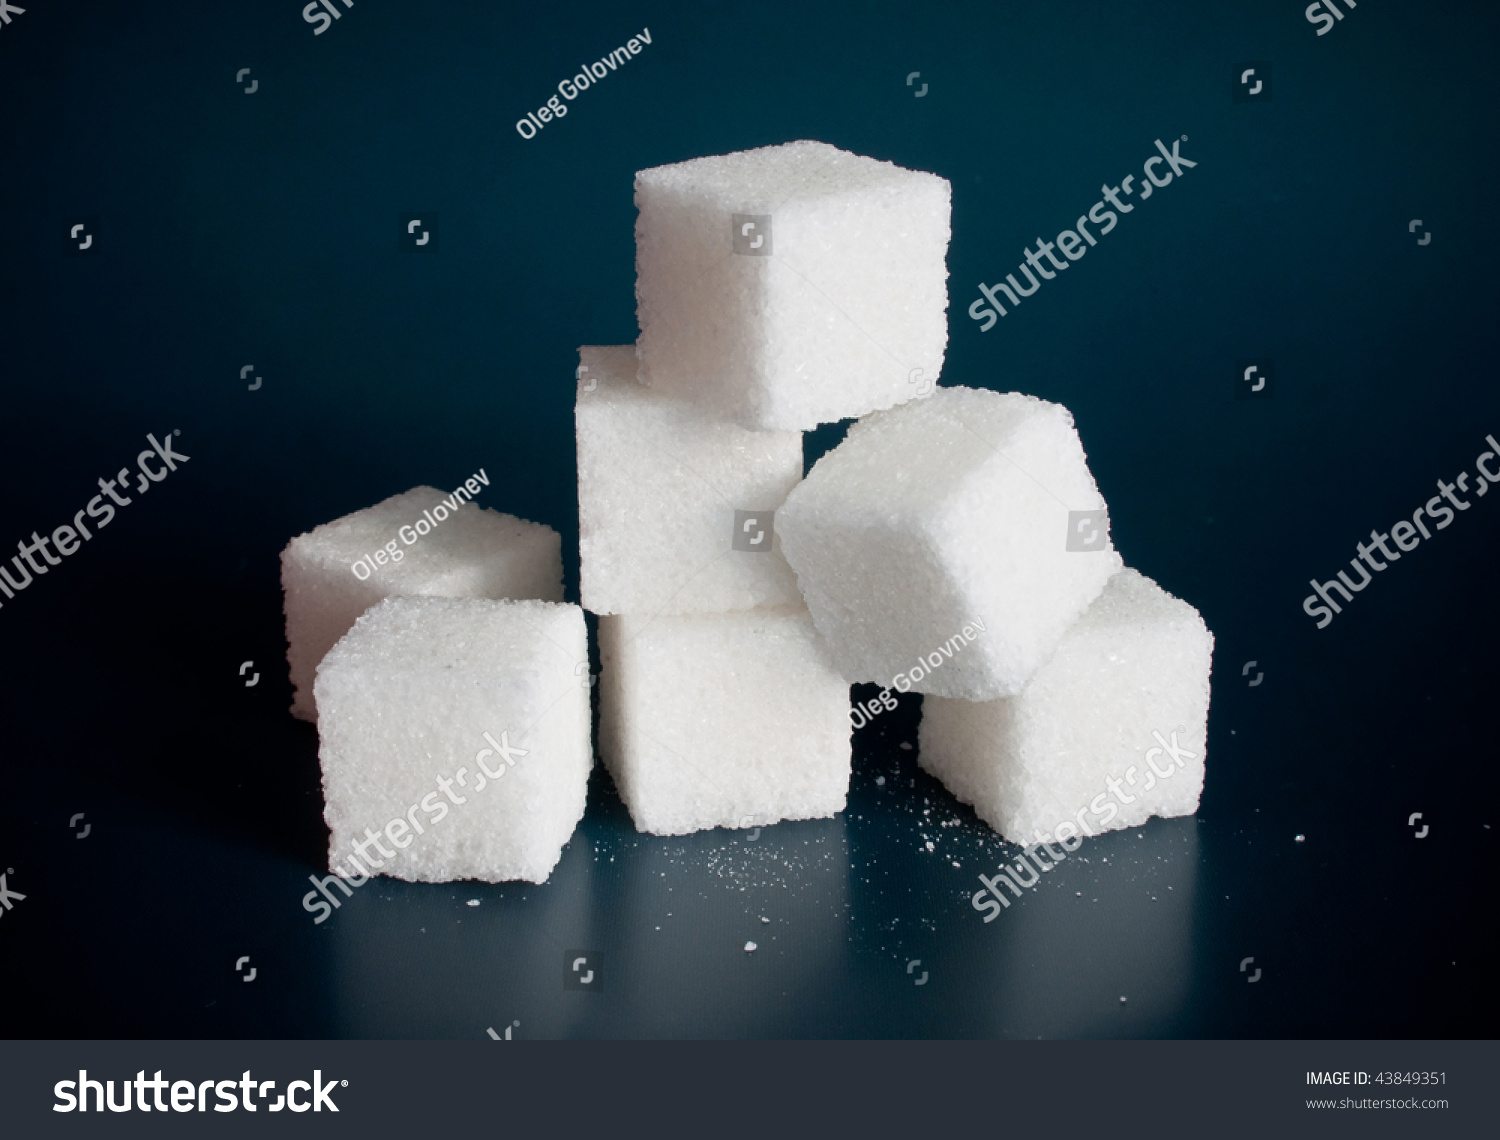 Sugarcubes Images, Stock Photos & Vectors | Shutterstock